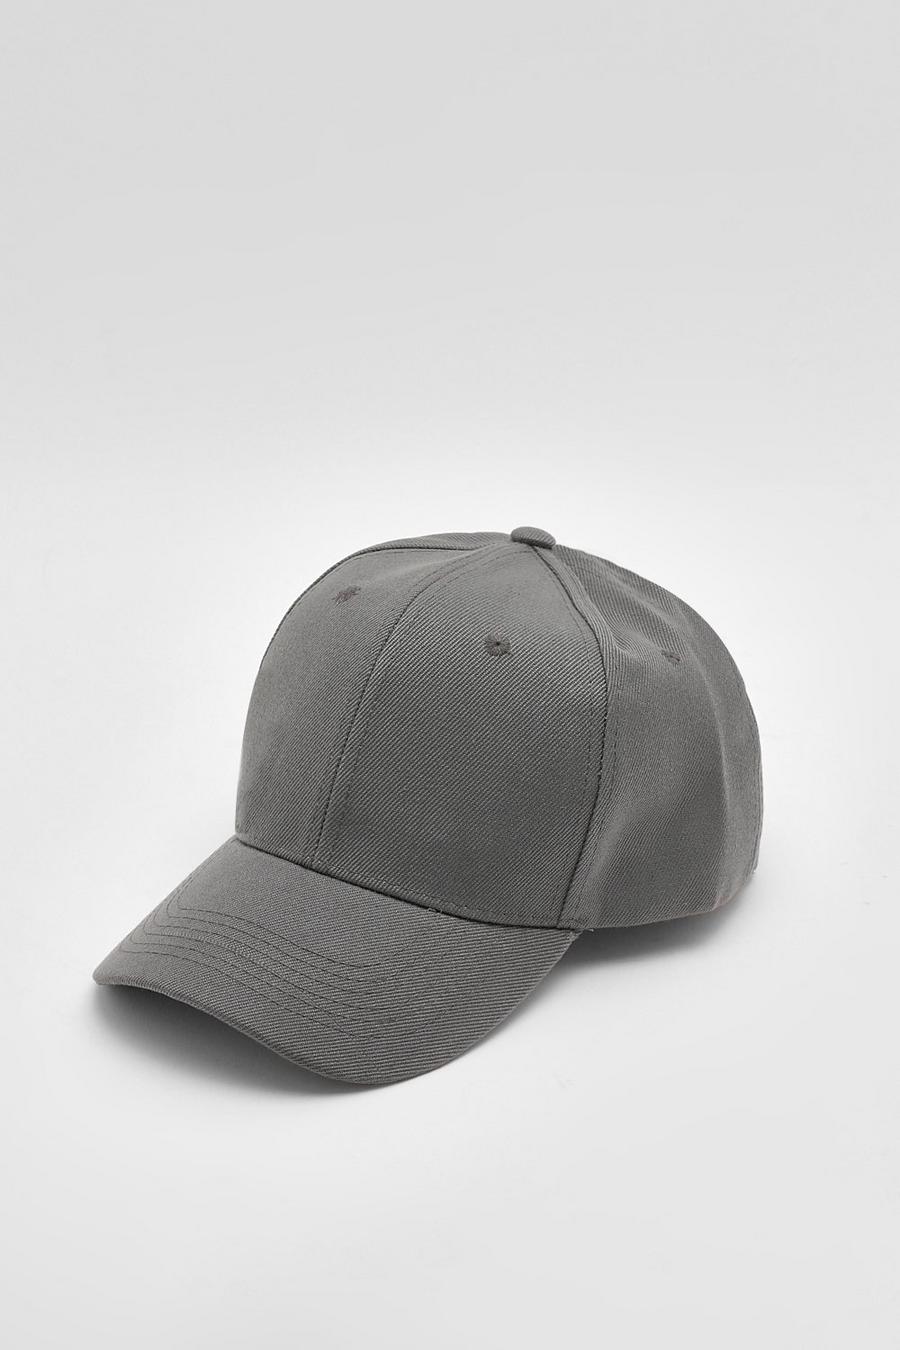 Dark grey כובע מצחייה חלק בסגנון בייסבול בצבע אפור כהה 